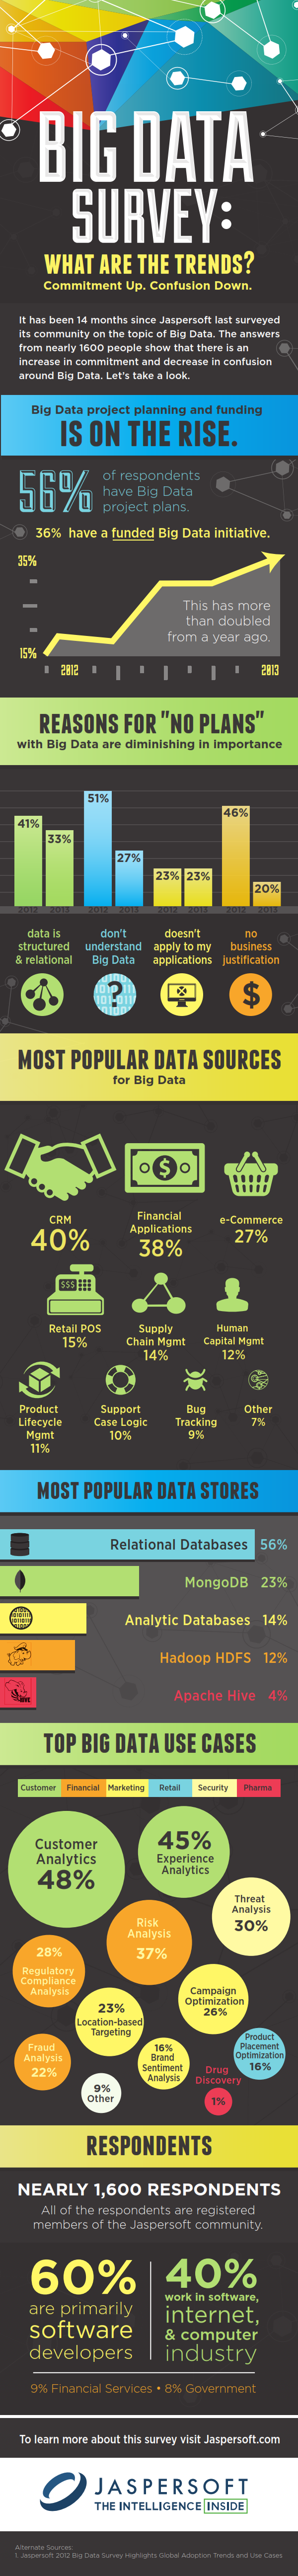 Big-Data-Survey-Infographic-FINAL_001